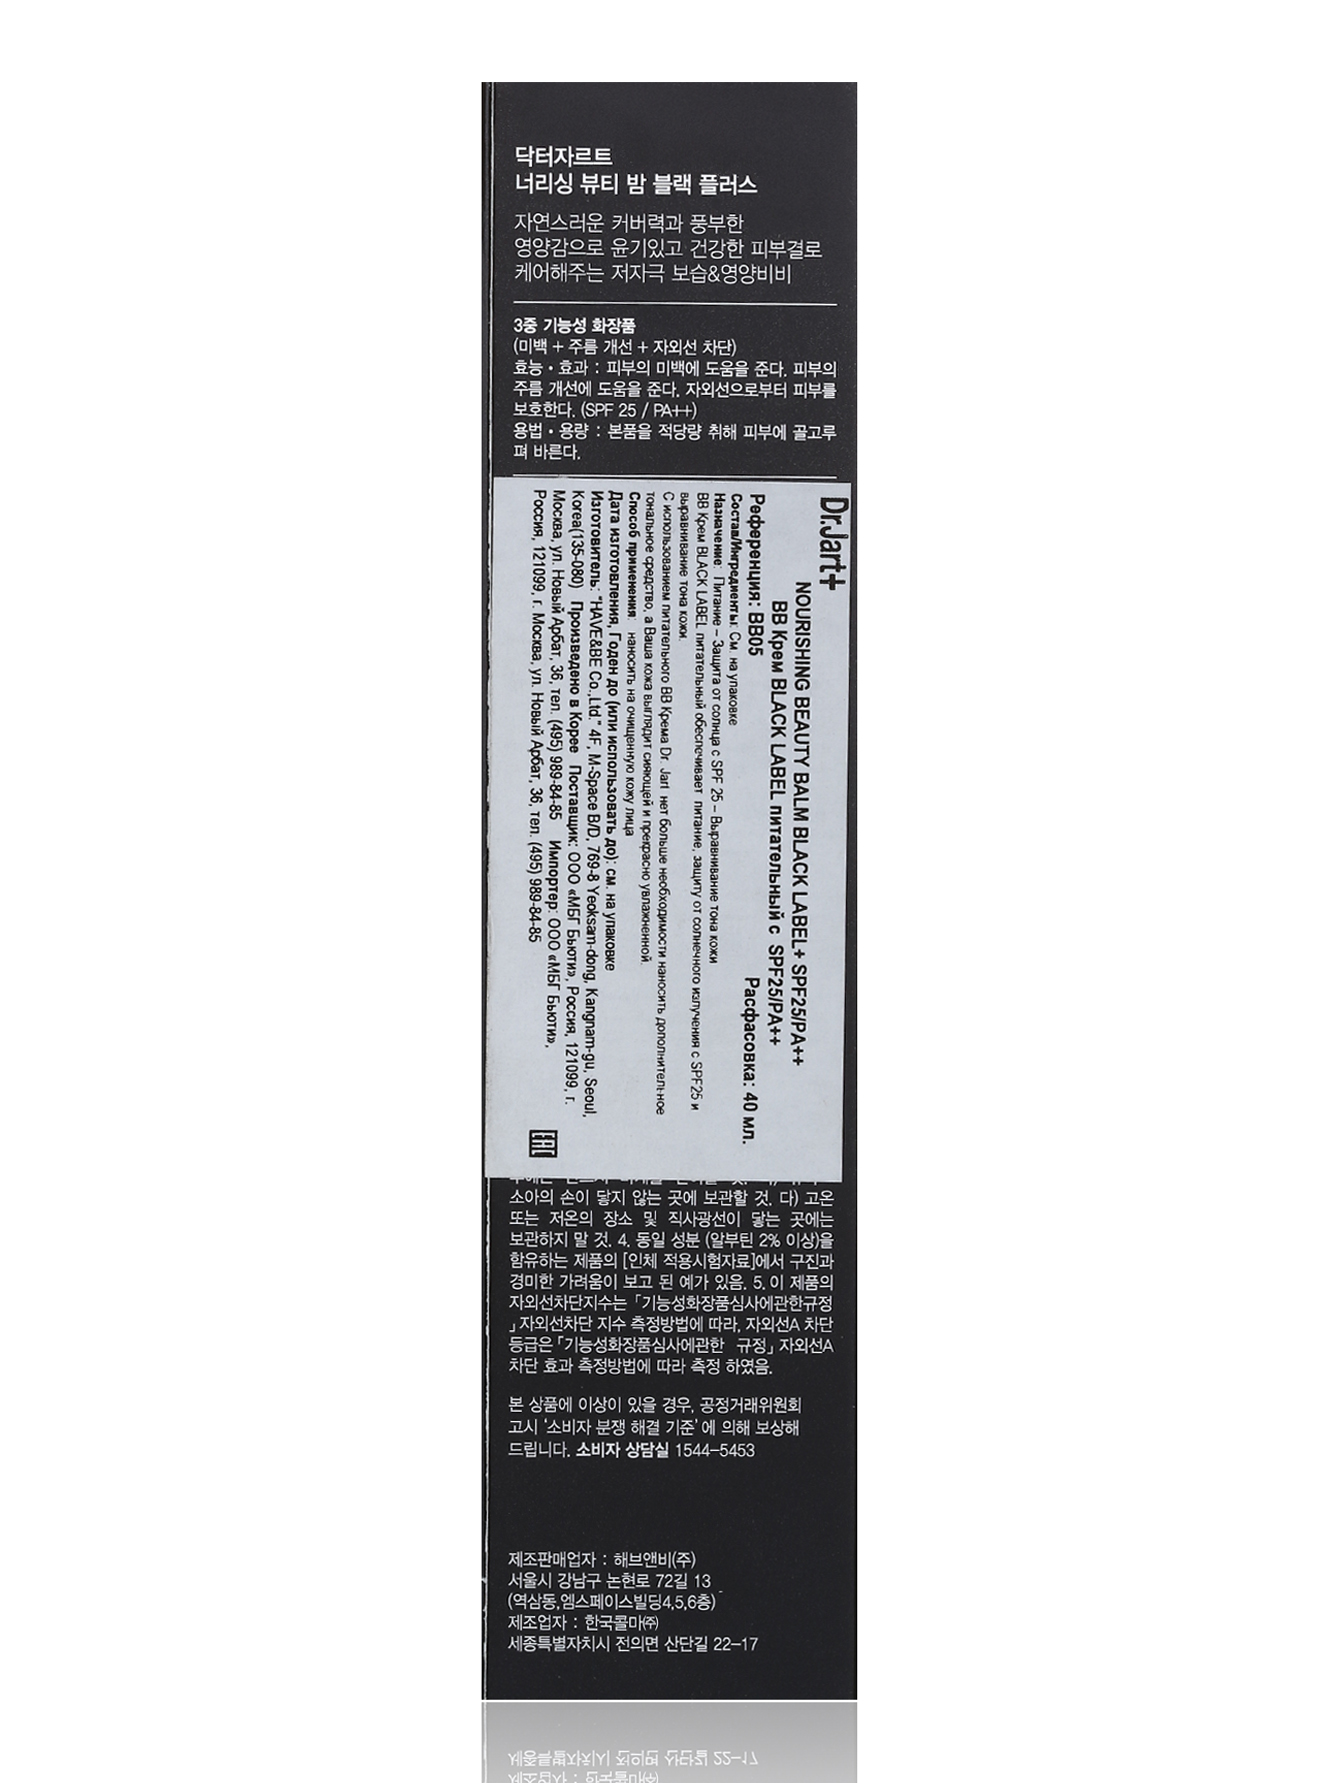  BB Крем - Black label, Face Care, 40ml - Модель Верх-Низ